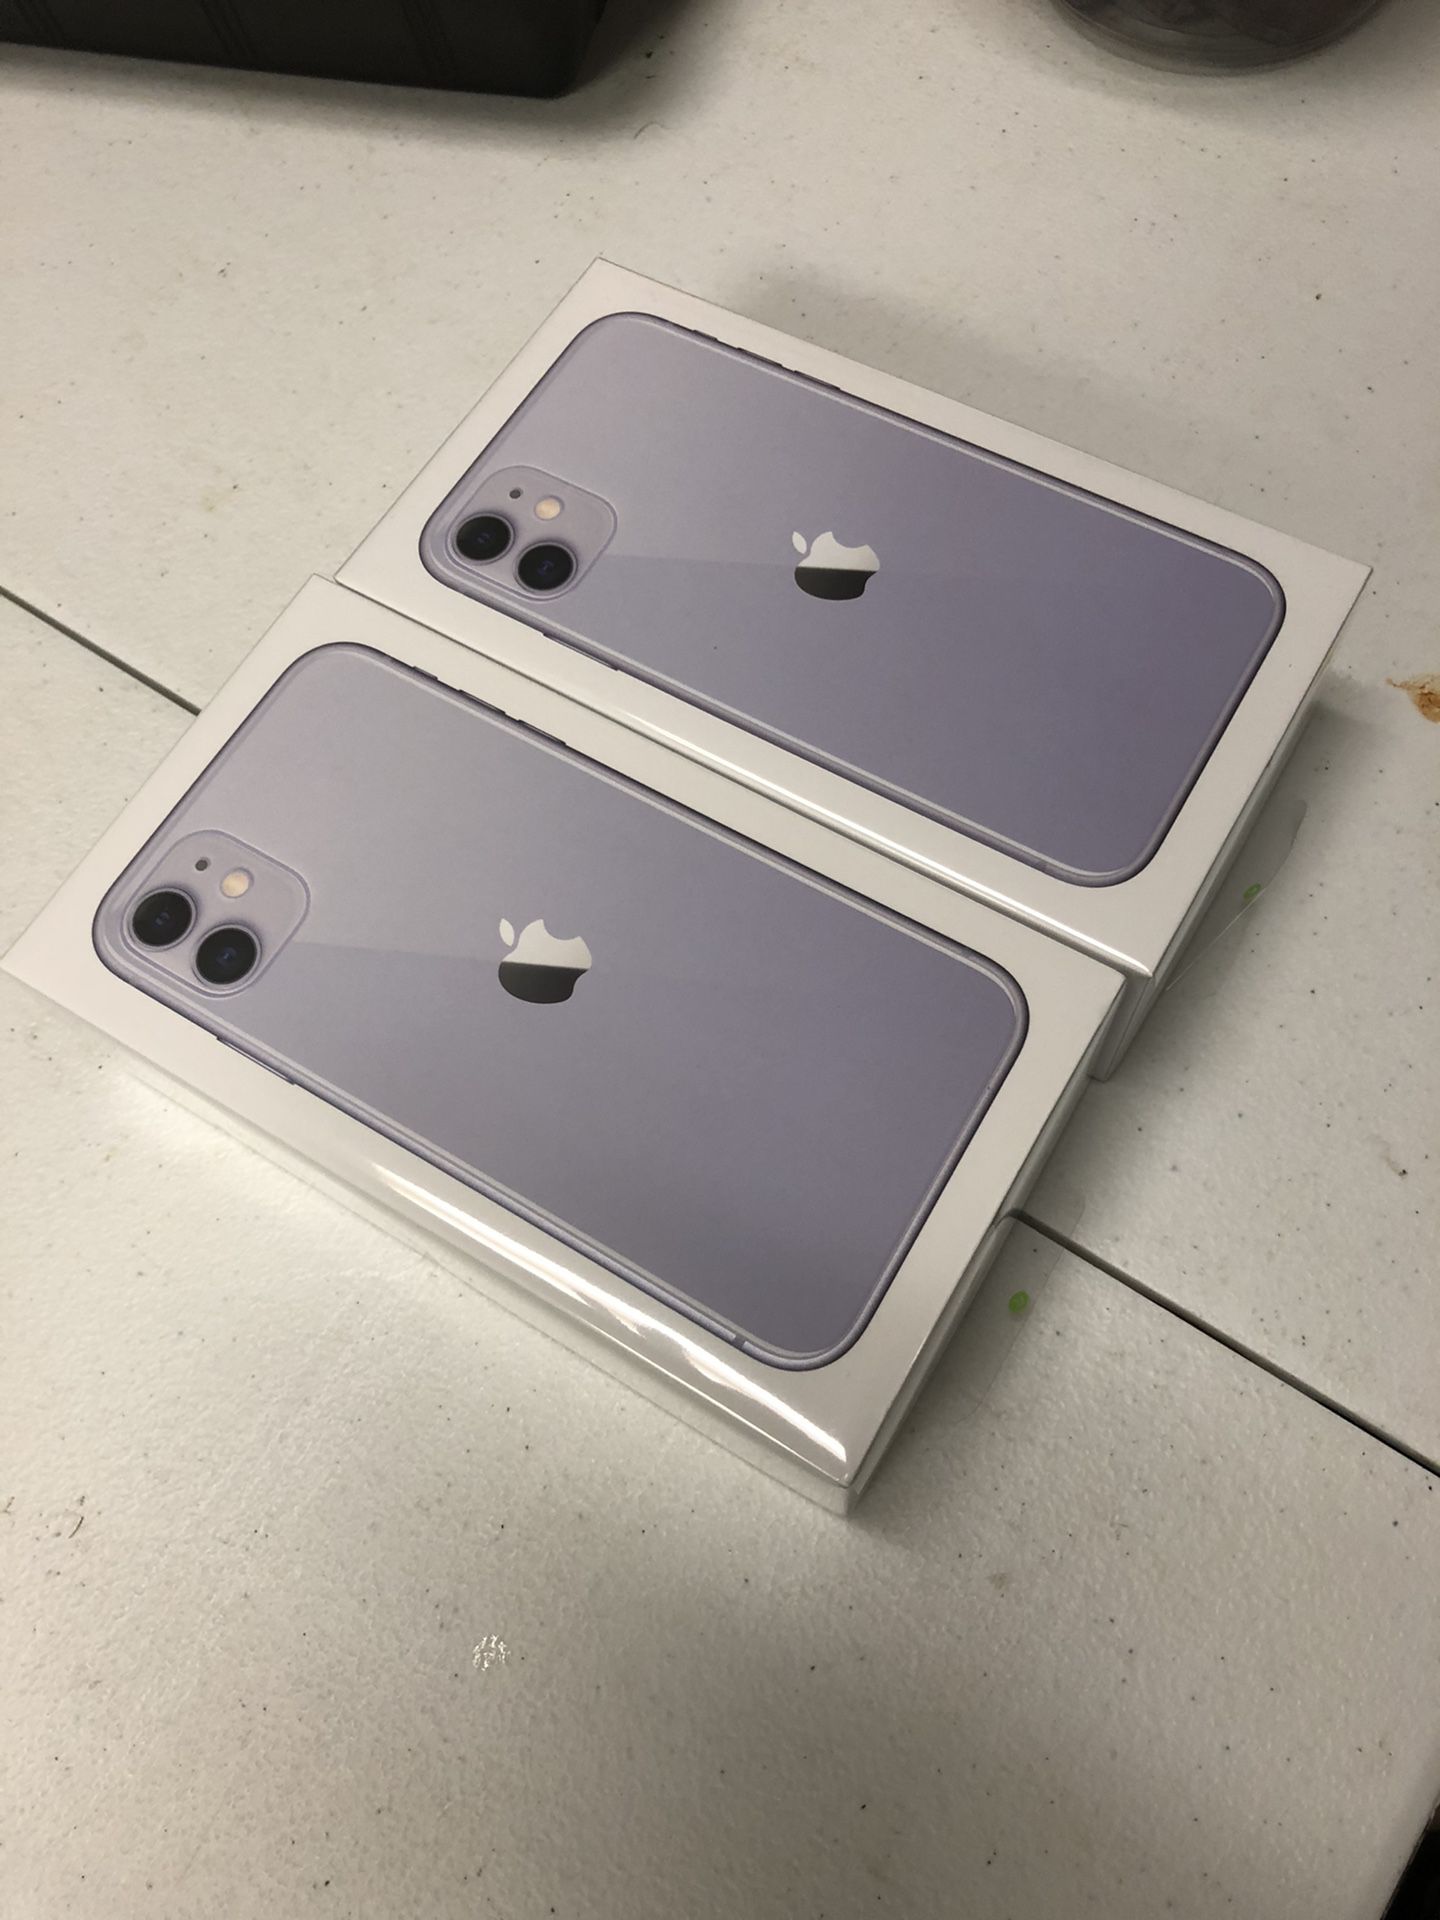 Brand new sealed in box purple iPhone 11 64gb Tmobile